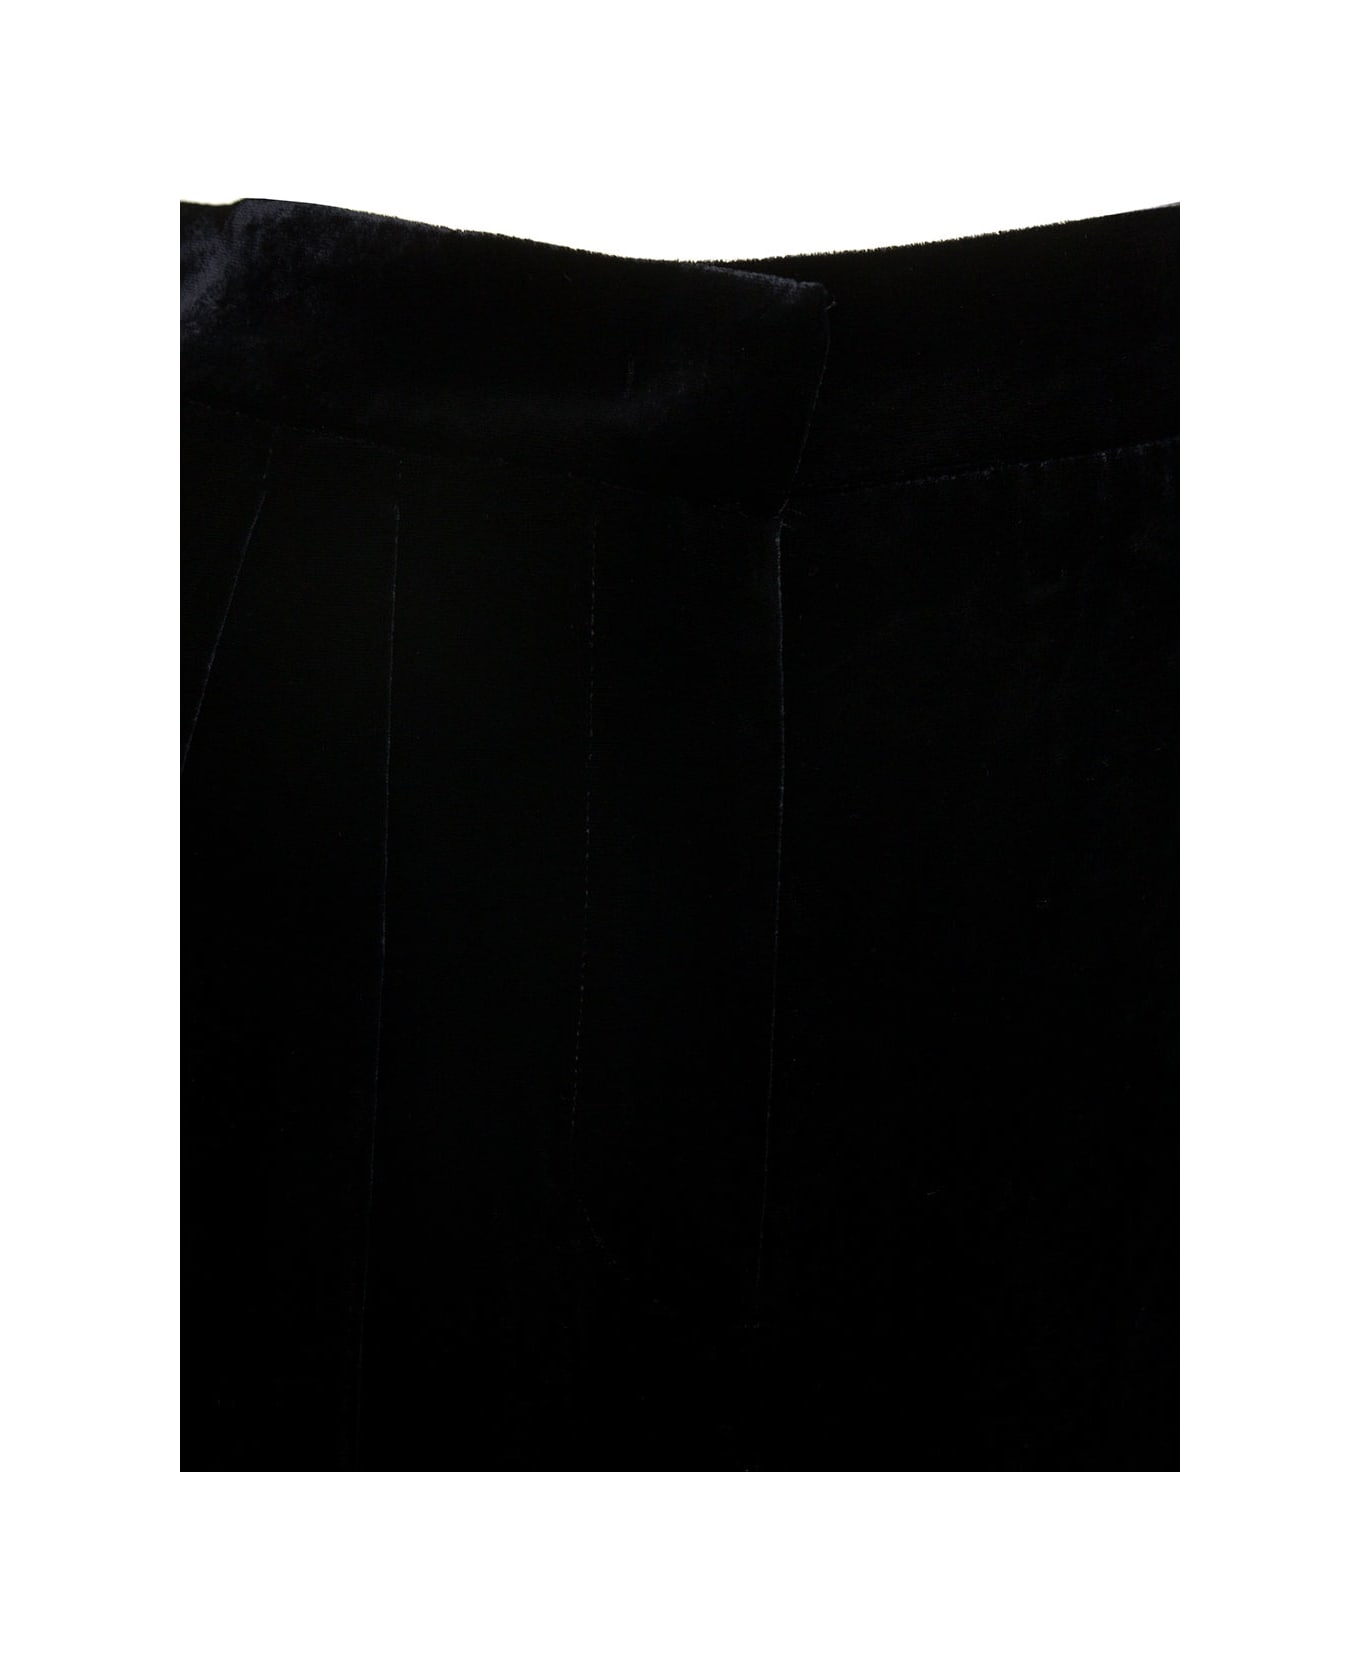 Alberta Ferretti Loose Black Pants With Invisible Zip In Velvet Woman - NERO